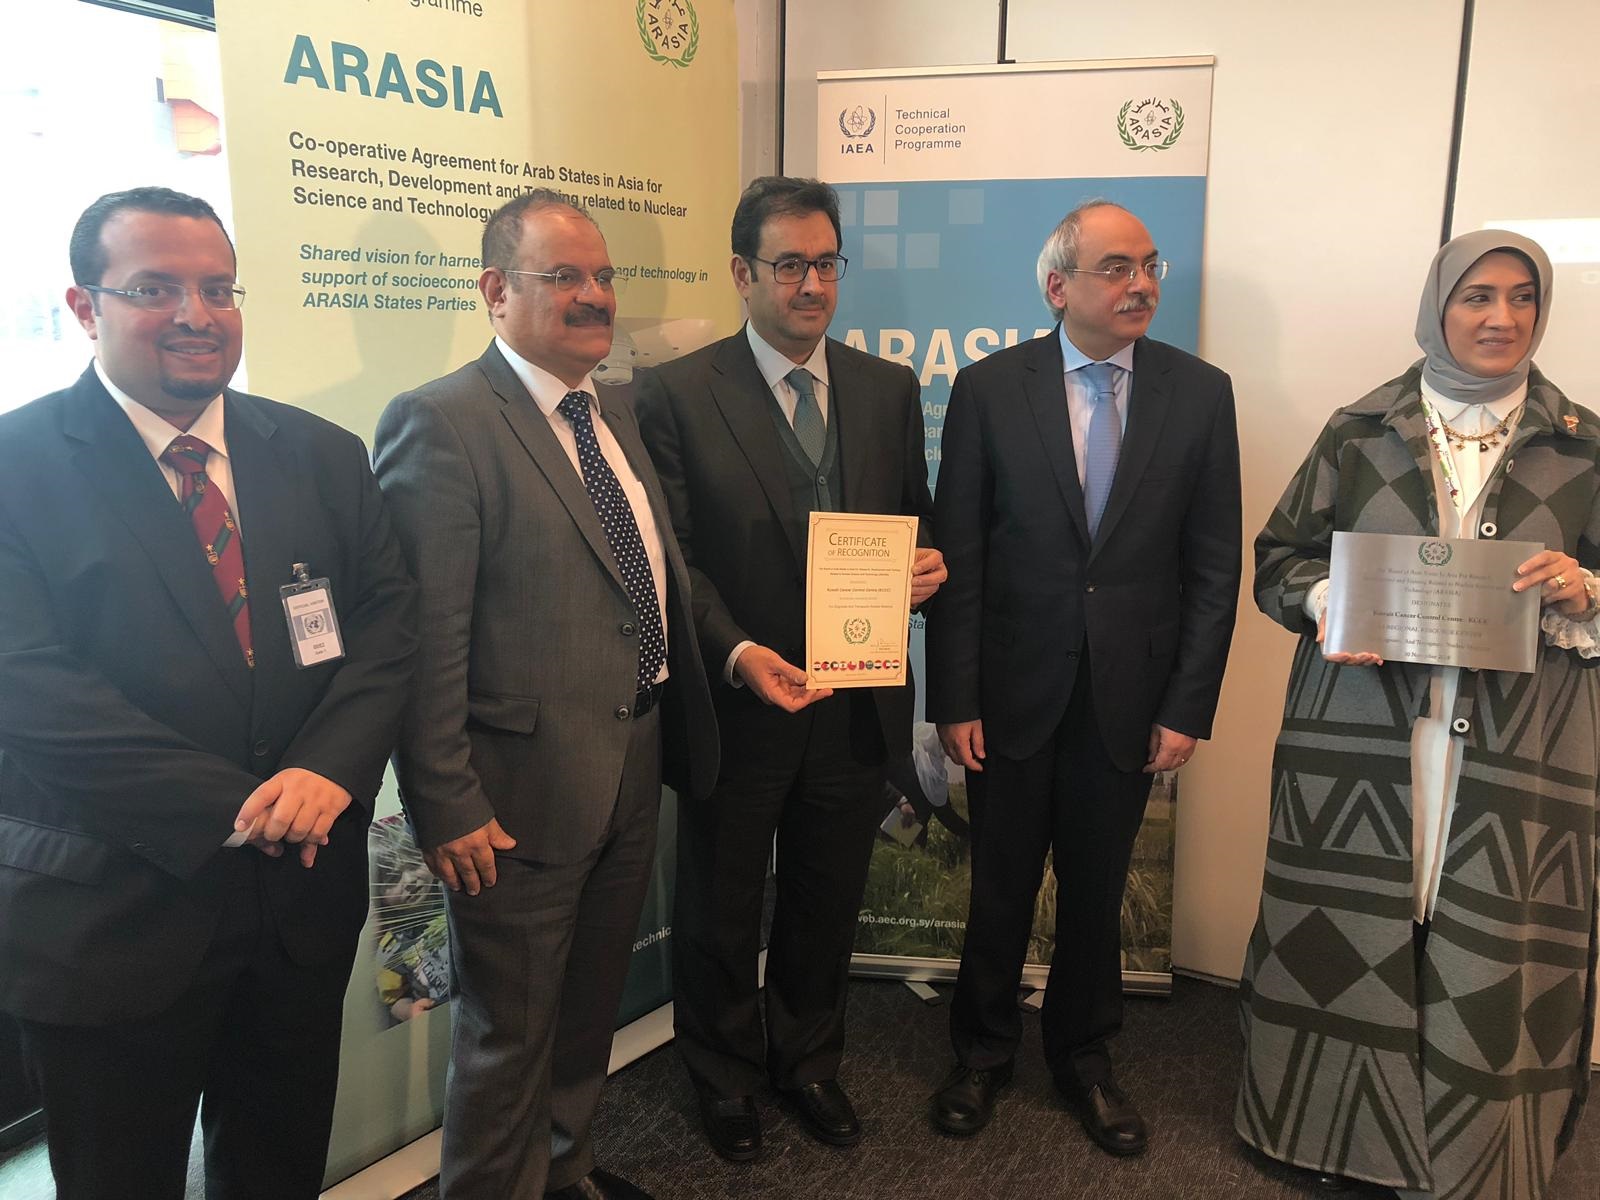 Kuwaiti Ambassador to Austria and Permanent Representative to International Organizations in Vienna Sadeq Marafi during the ceremony